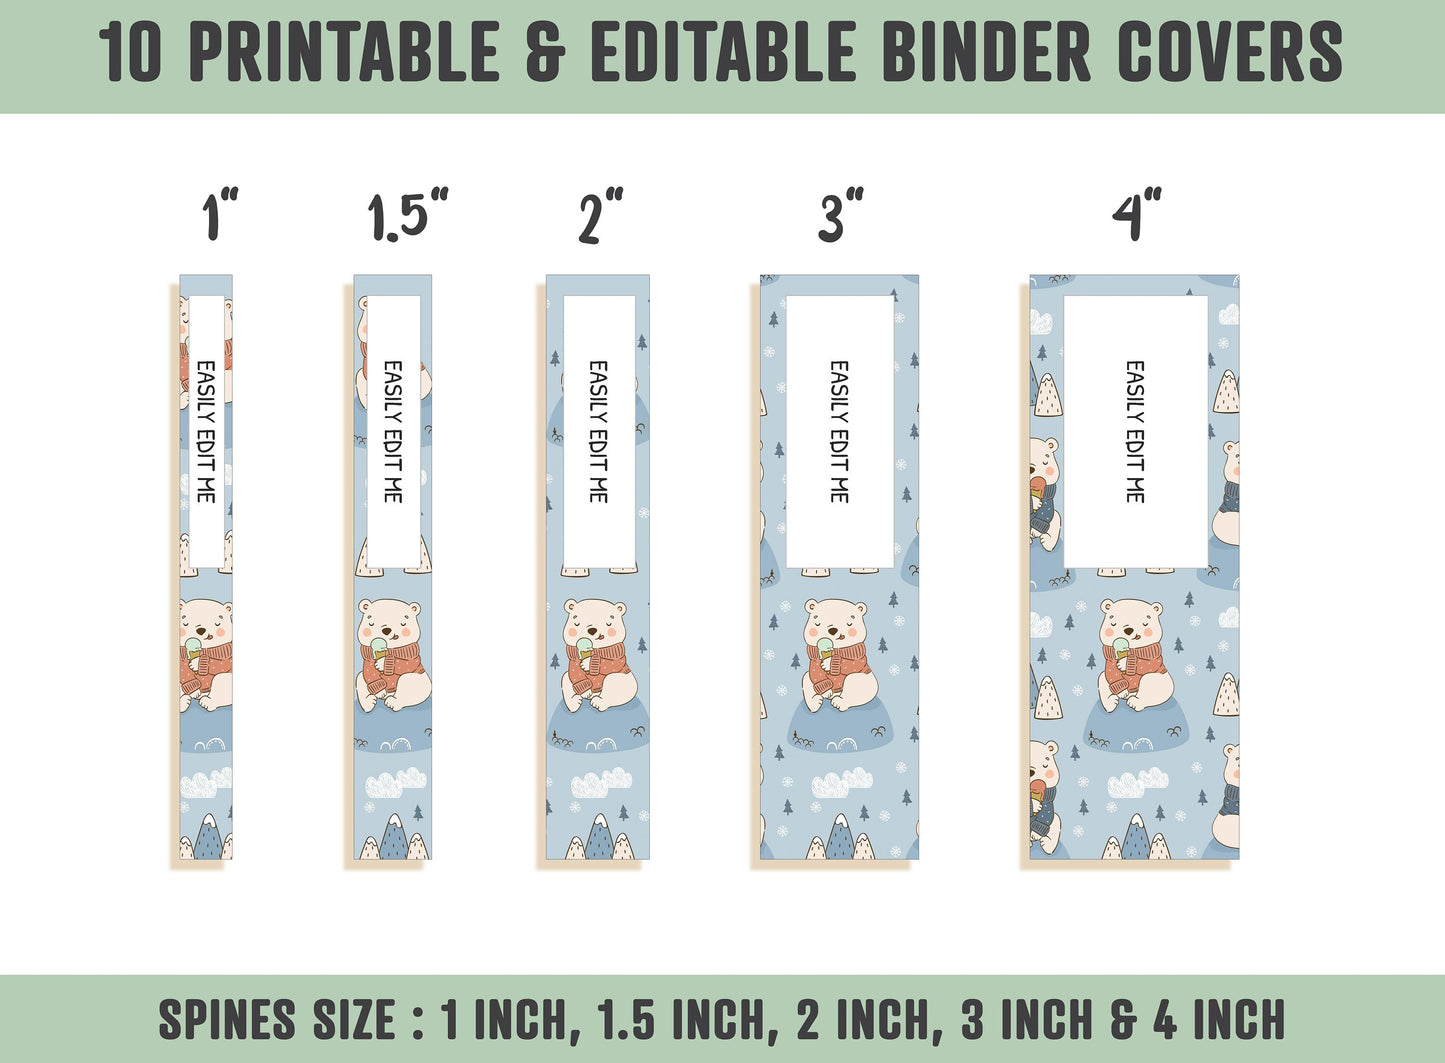 Animal Binder Cover, 10 Printable & Editable Covers+Spines, Binder Insert, Planner Cover, Teacher/School Binder Template, Bear Mouse Cat Owl